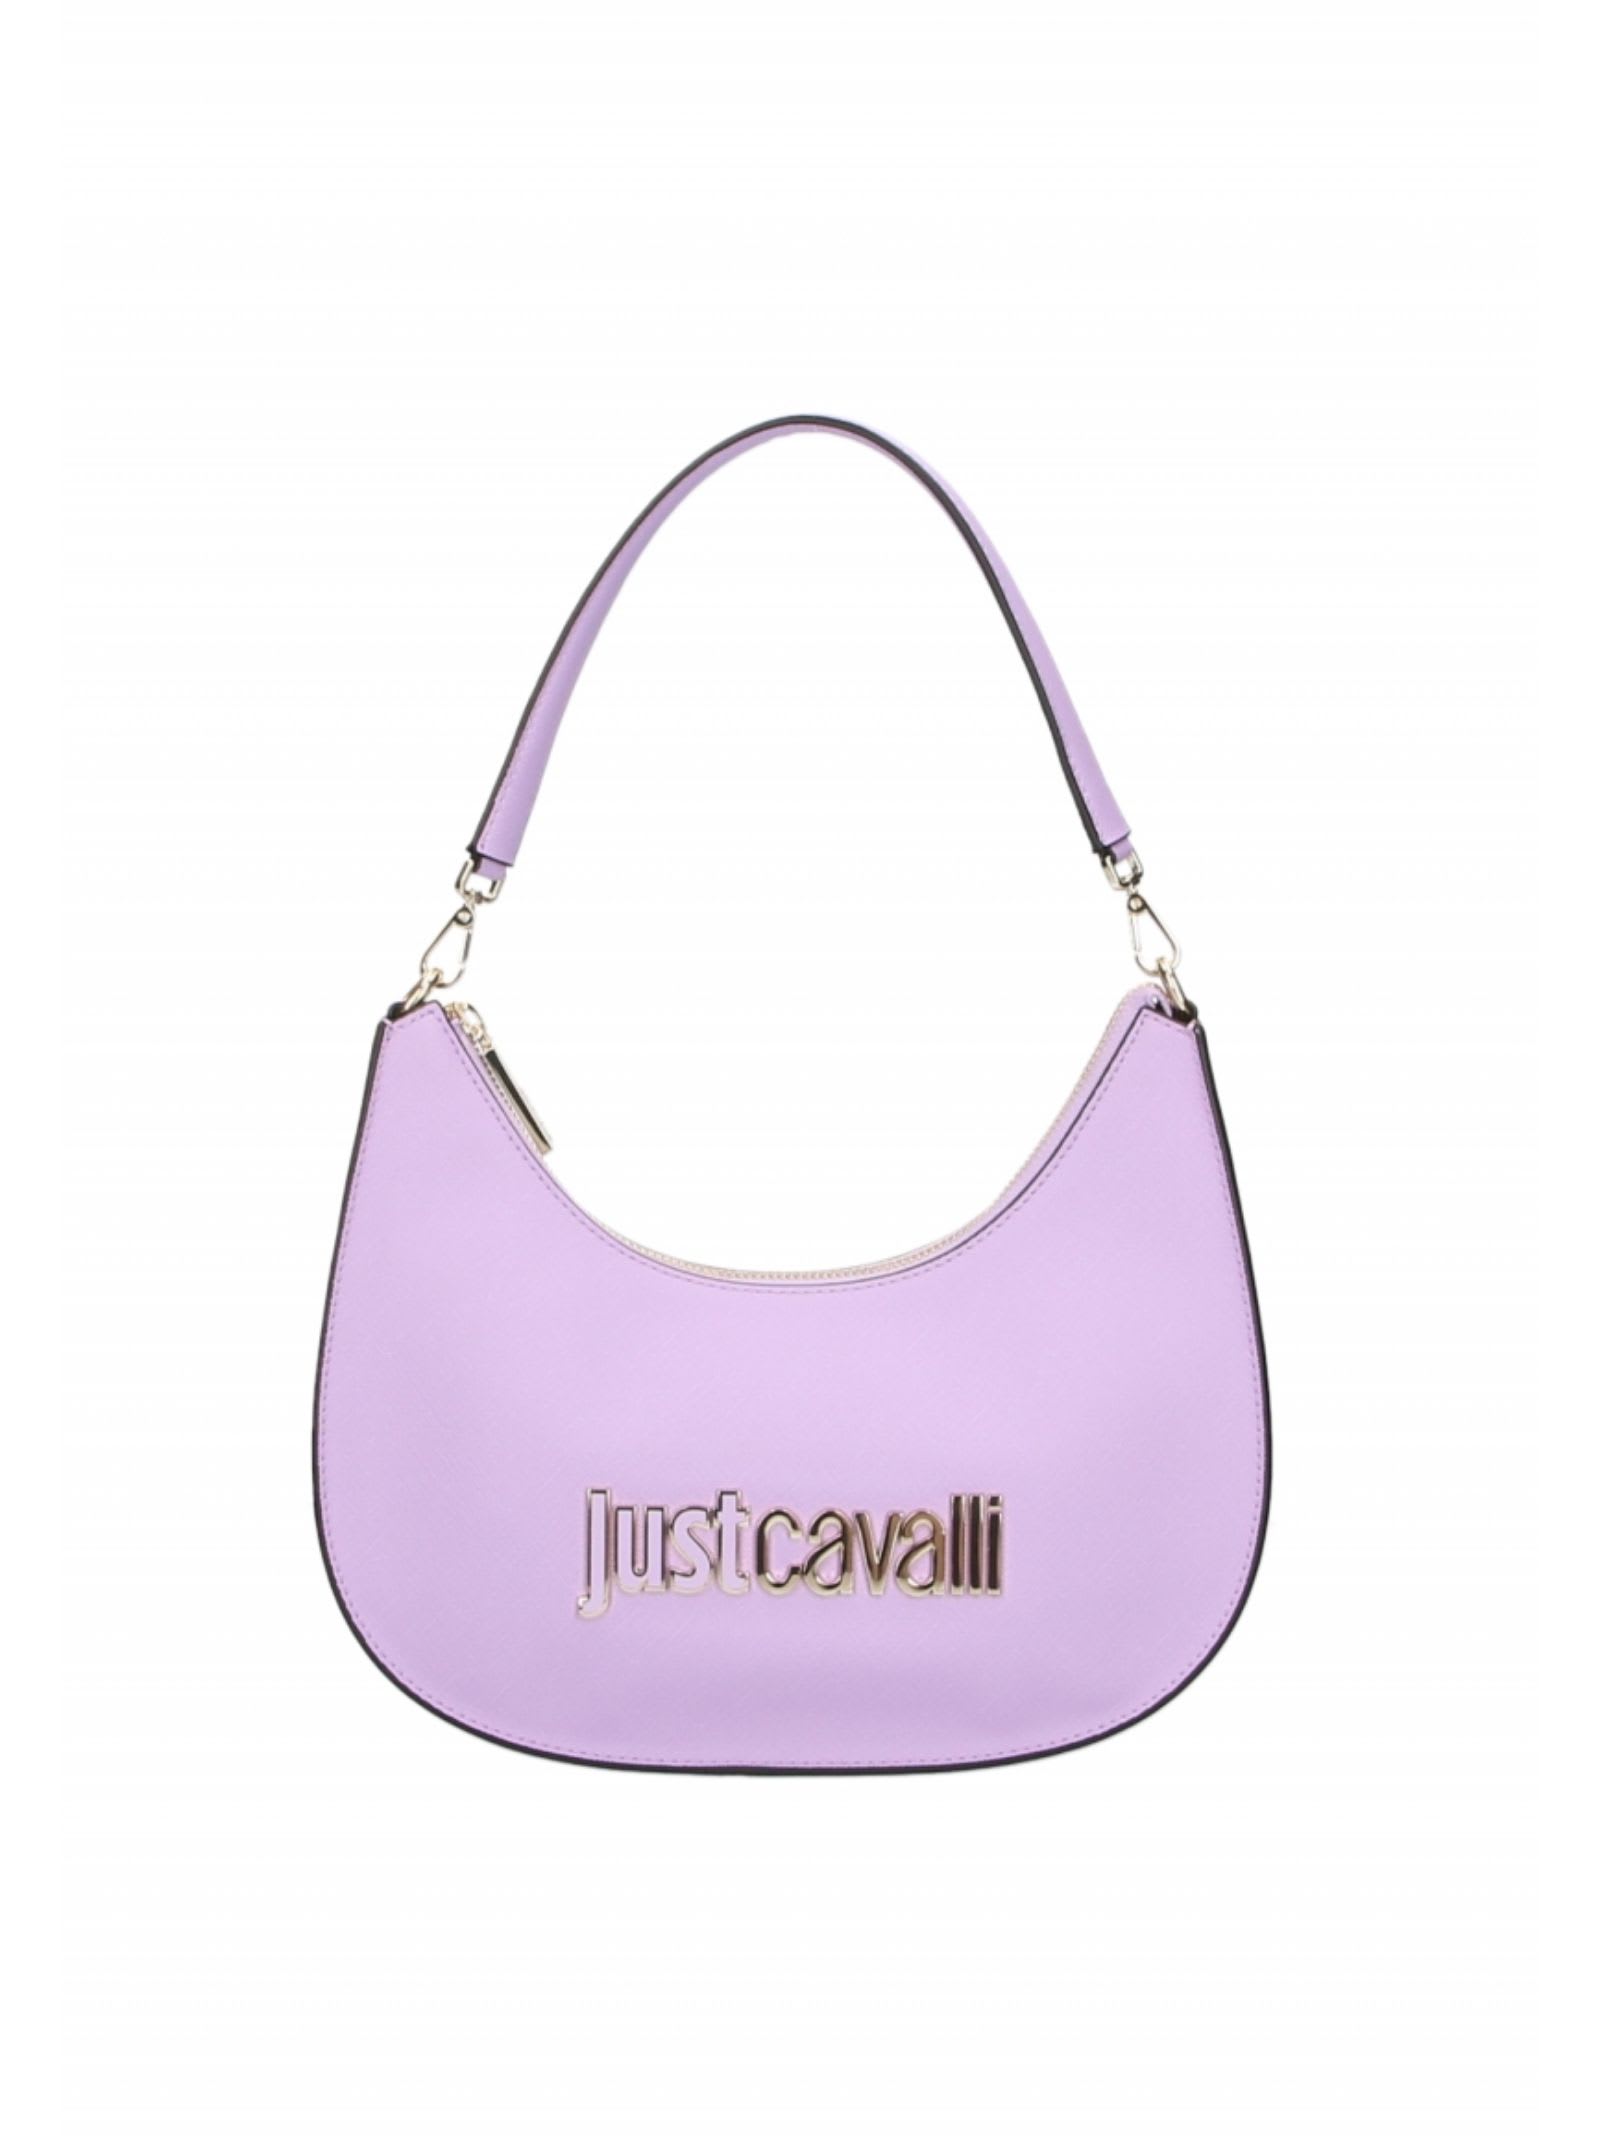 Roberto Cavalli Just Cavalli Bag In Pastel Liliac